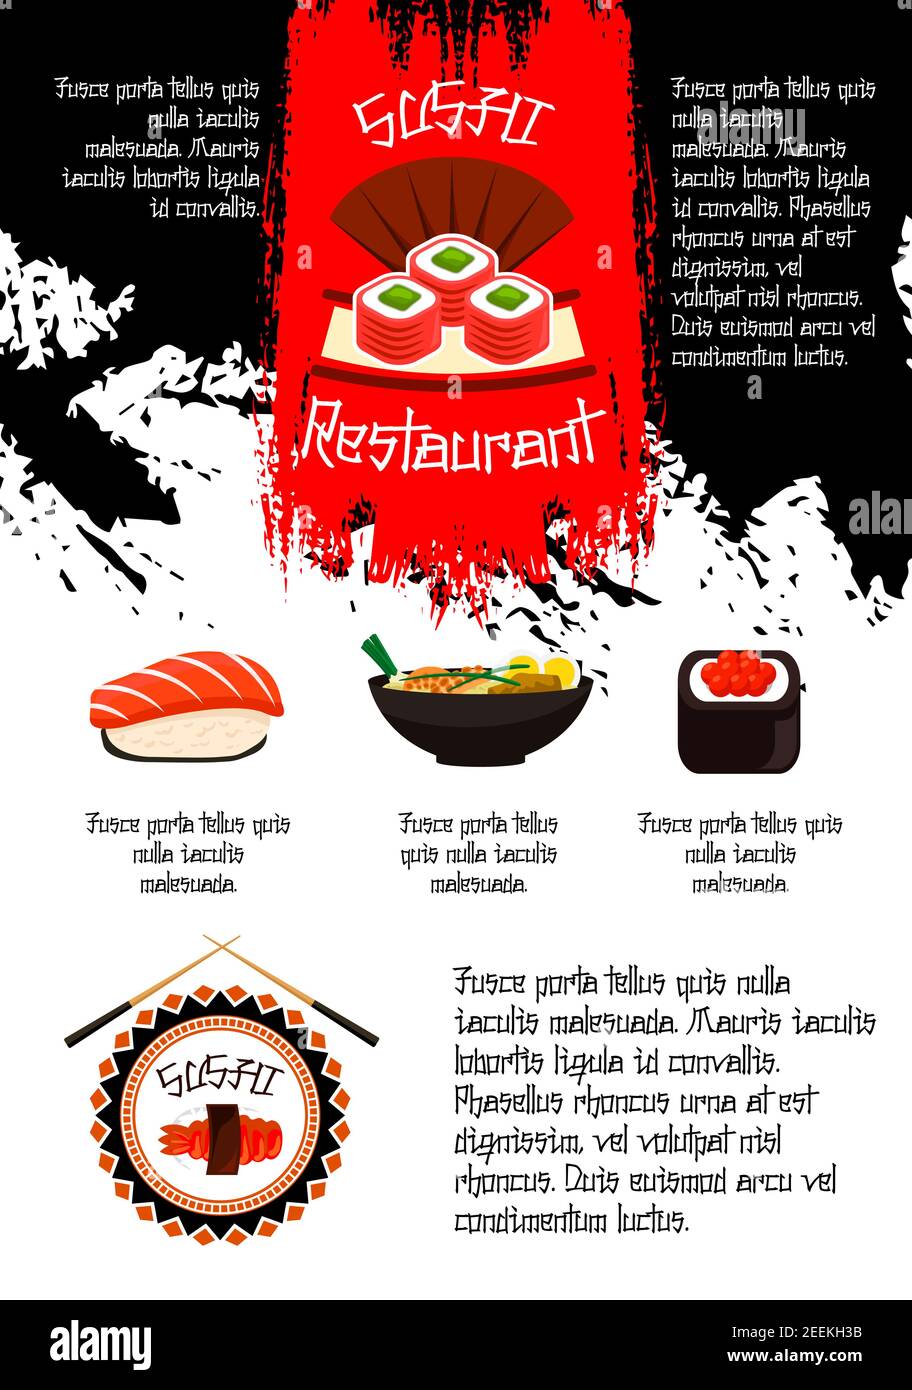 https://c8.alamy.com/comp/2EEKH3B/sushi-restaurant-vector-poster-for-japanese-cuisine-of-seafood-noodles-sushi-rolls-or-fish-maki-and-eel-guncans-or-salmon-sashimi-tempura-shrimp-pra-2EEKH3B.jpg